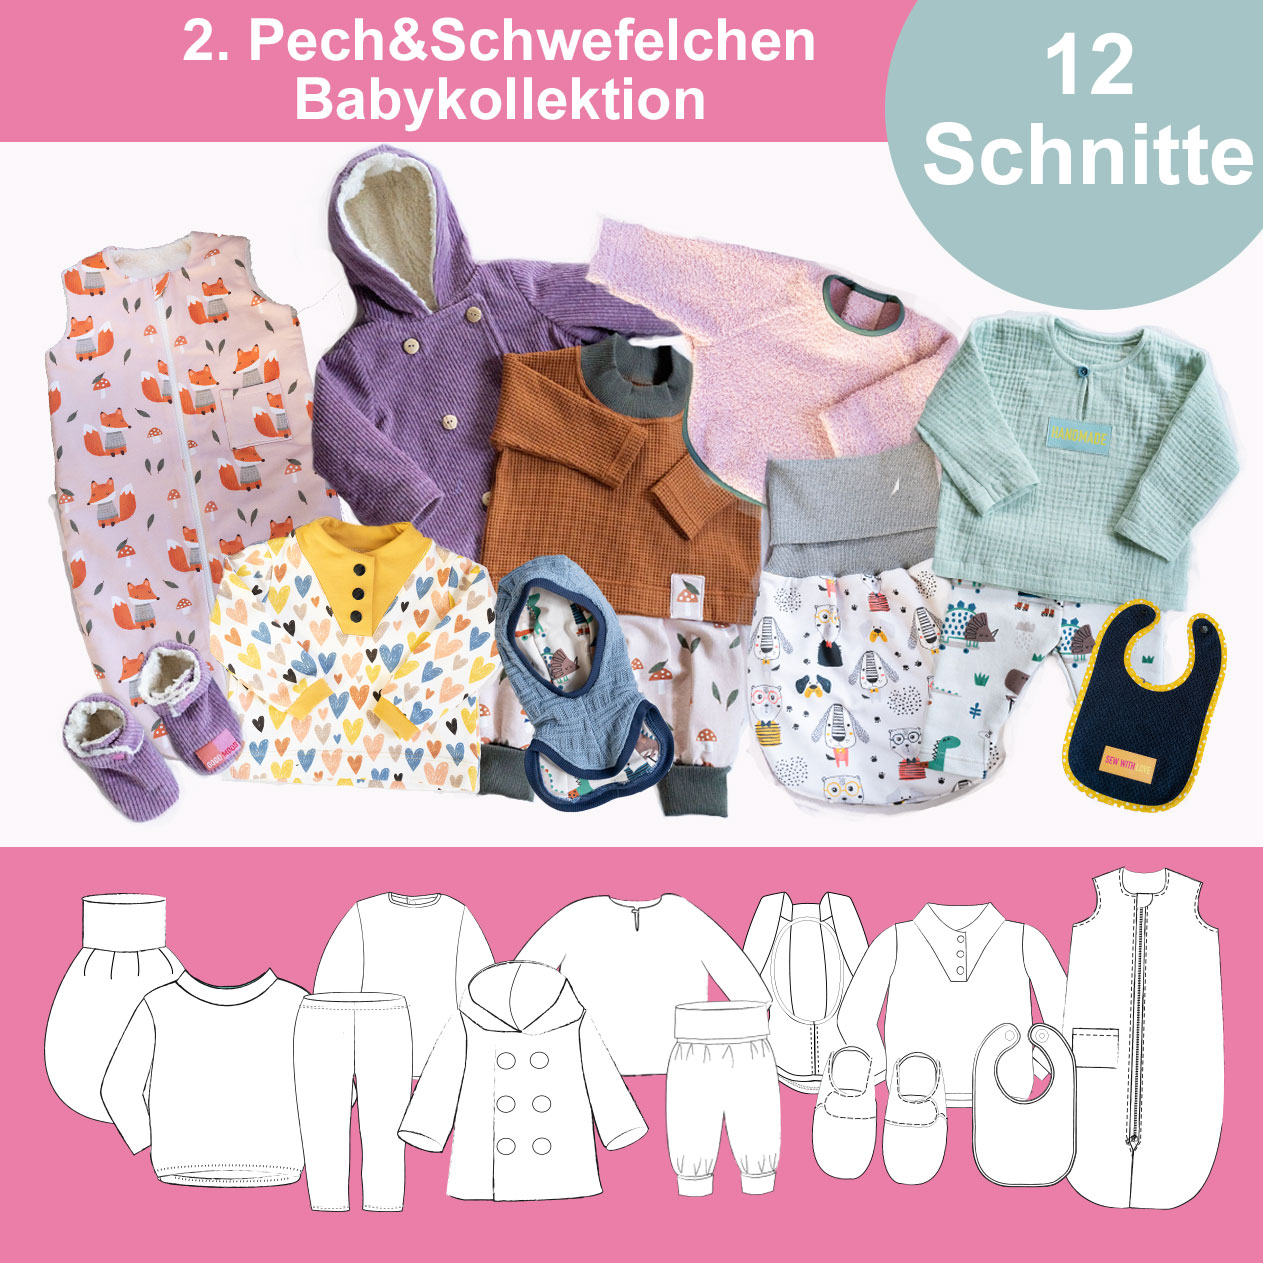 Set 2 “Pech&Schwefelchen ” +  Schnittbogen per Post